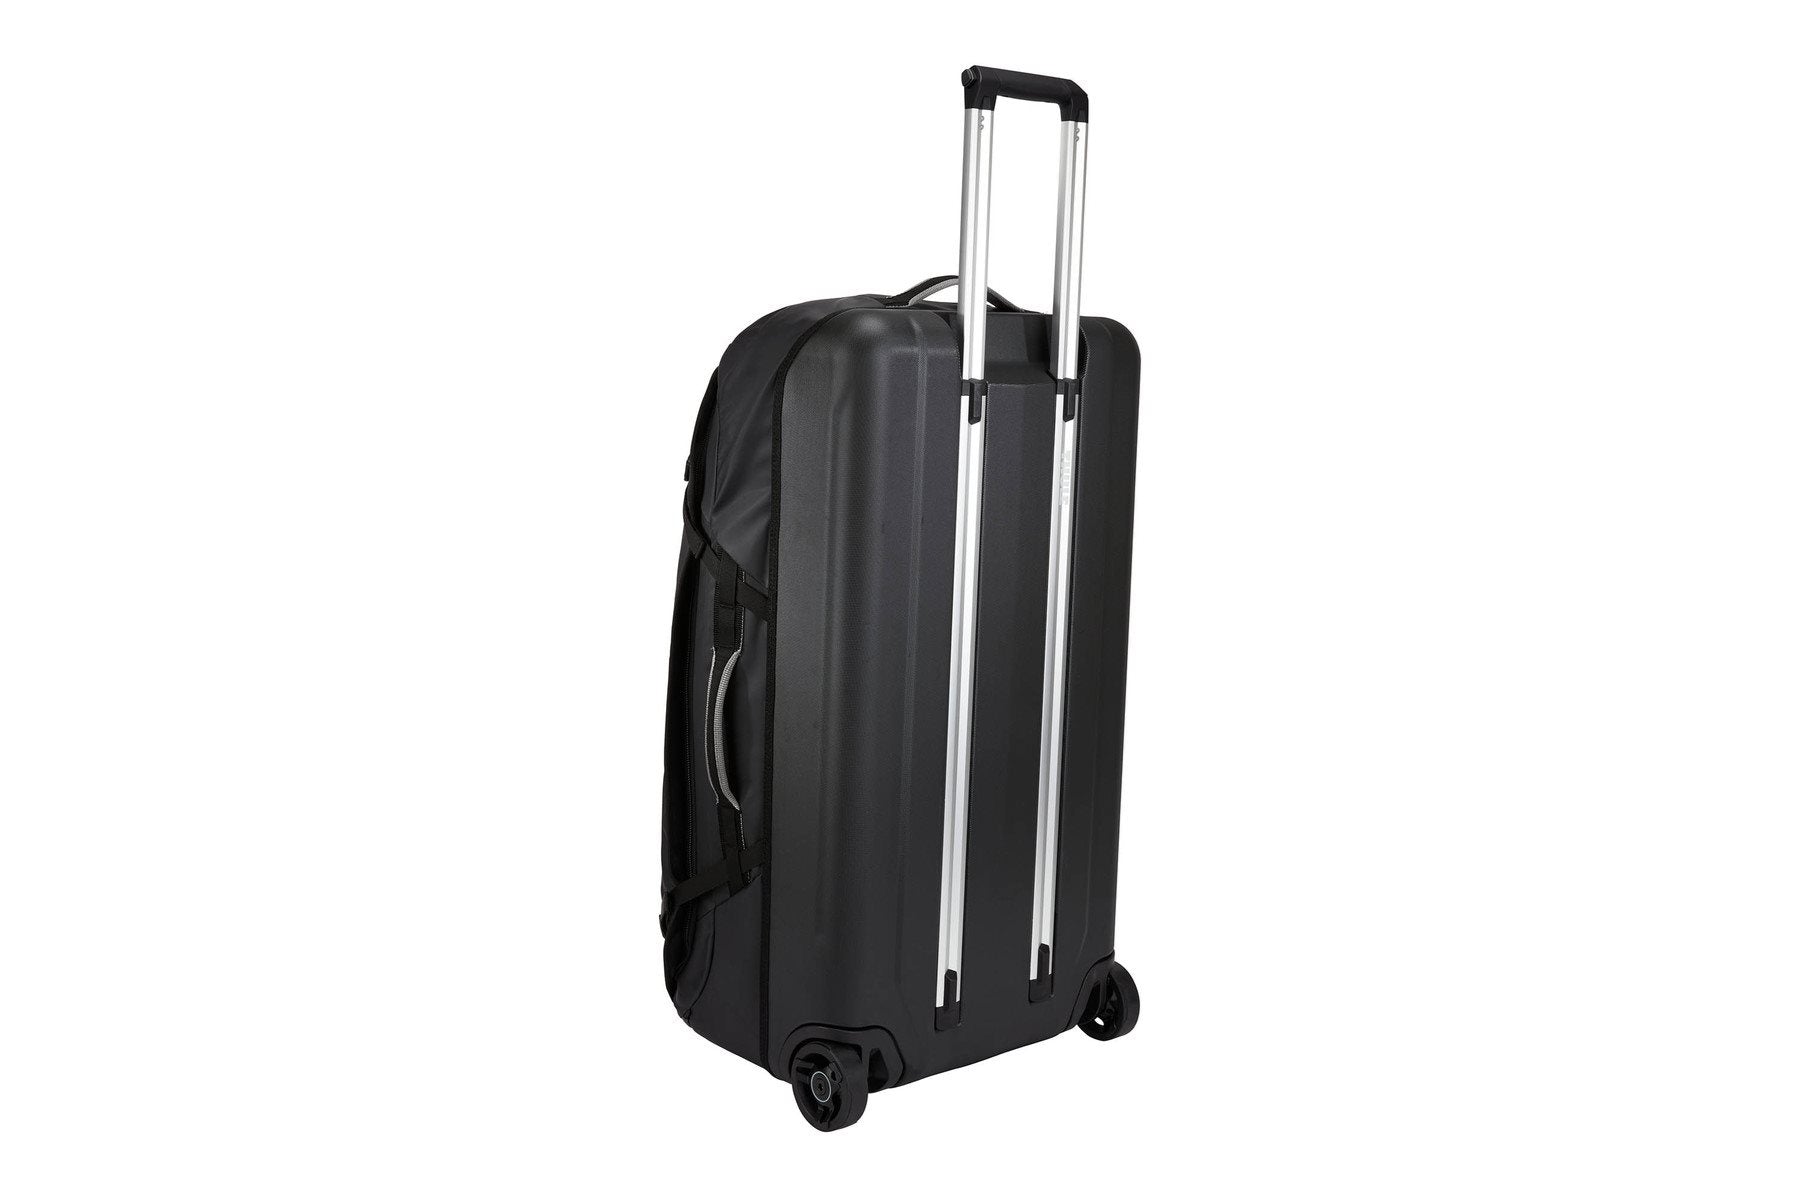 Thule Chasm Luggage 81cm/32" - Black Ruimbagage Koffer - Reisartikelen-nl